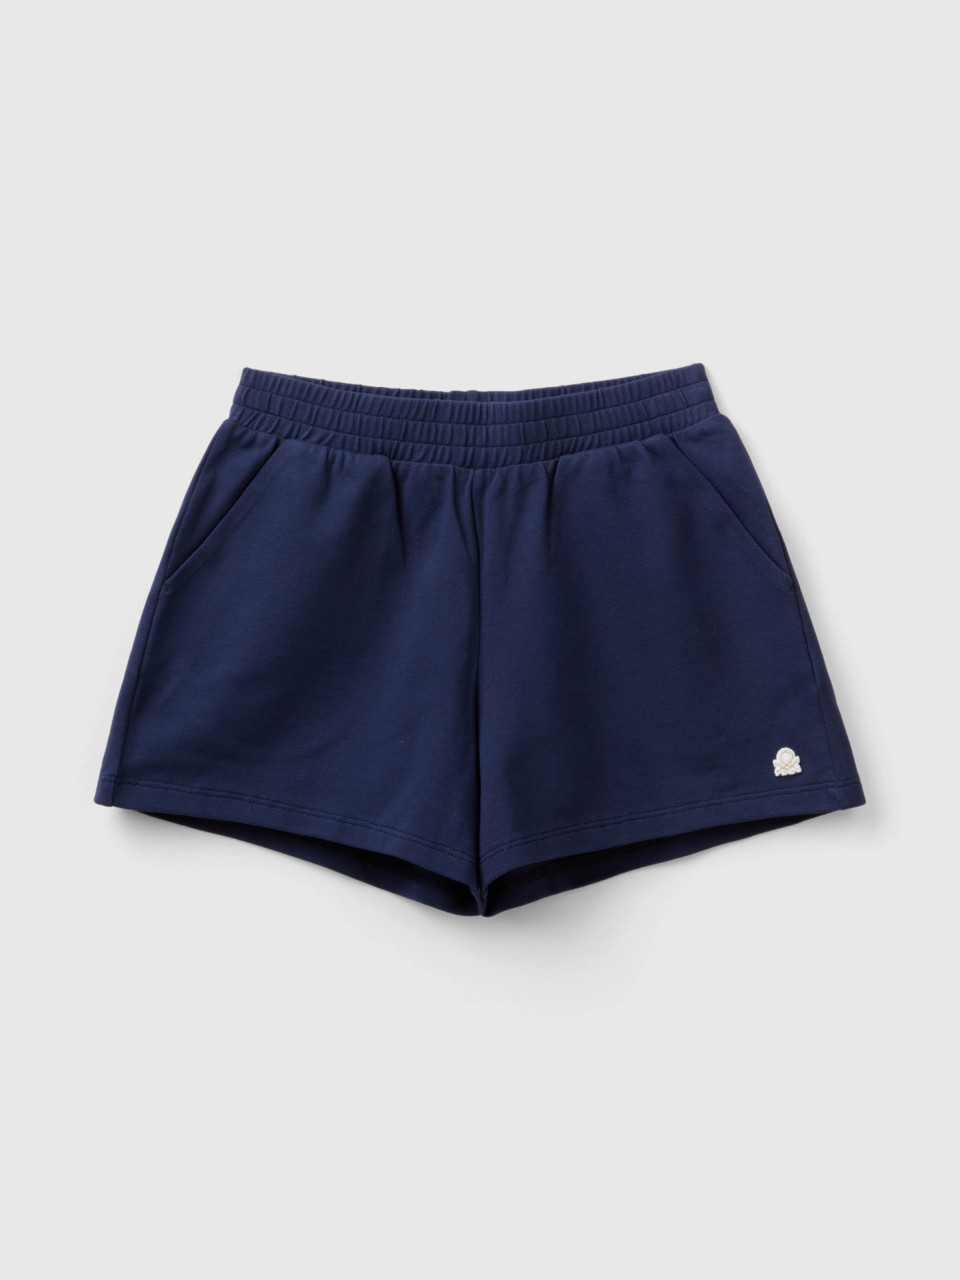 Benetton, Stretch Organic Cotton Shorts, Dark Blue, Kids